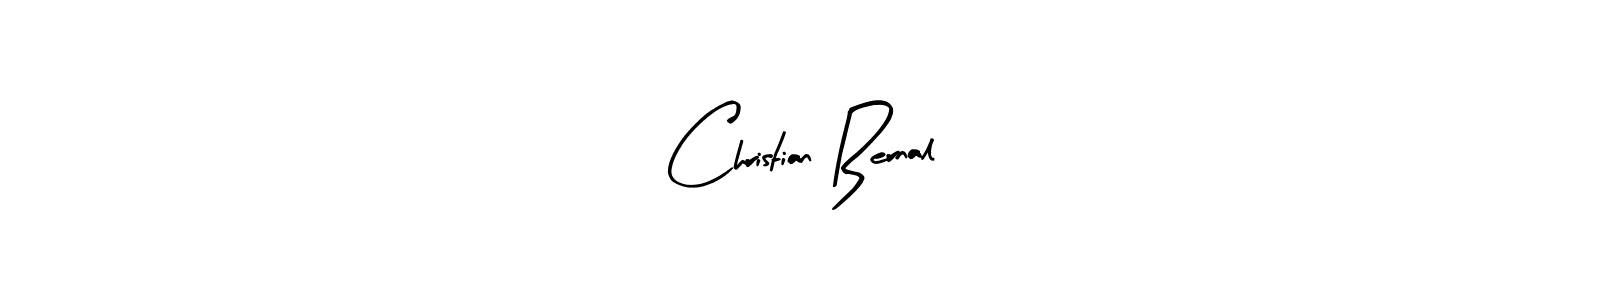 72+ Christian Bernal Name Signature Style Ideas | Superb eSignature